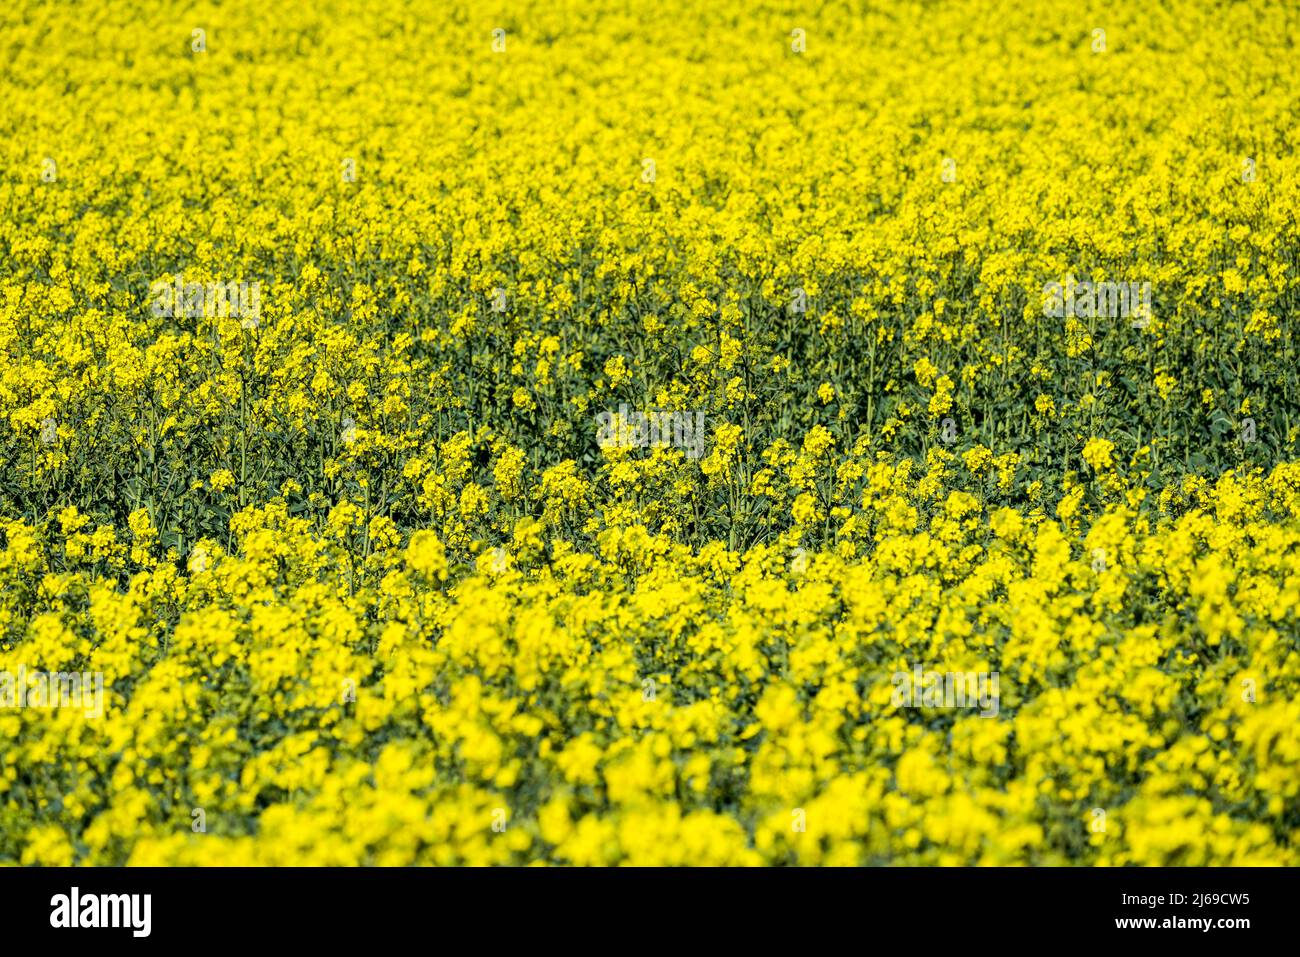 Paysage avec champs de colza près de Gewissenruh, Wesertal, Weserbergland, Hesse, Allemagne Banque D'Images